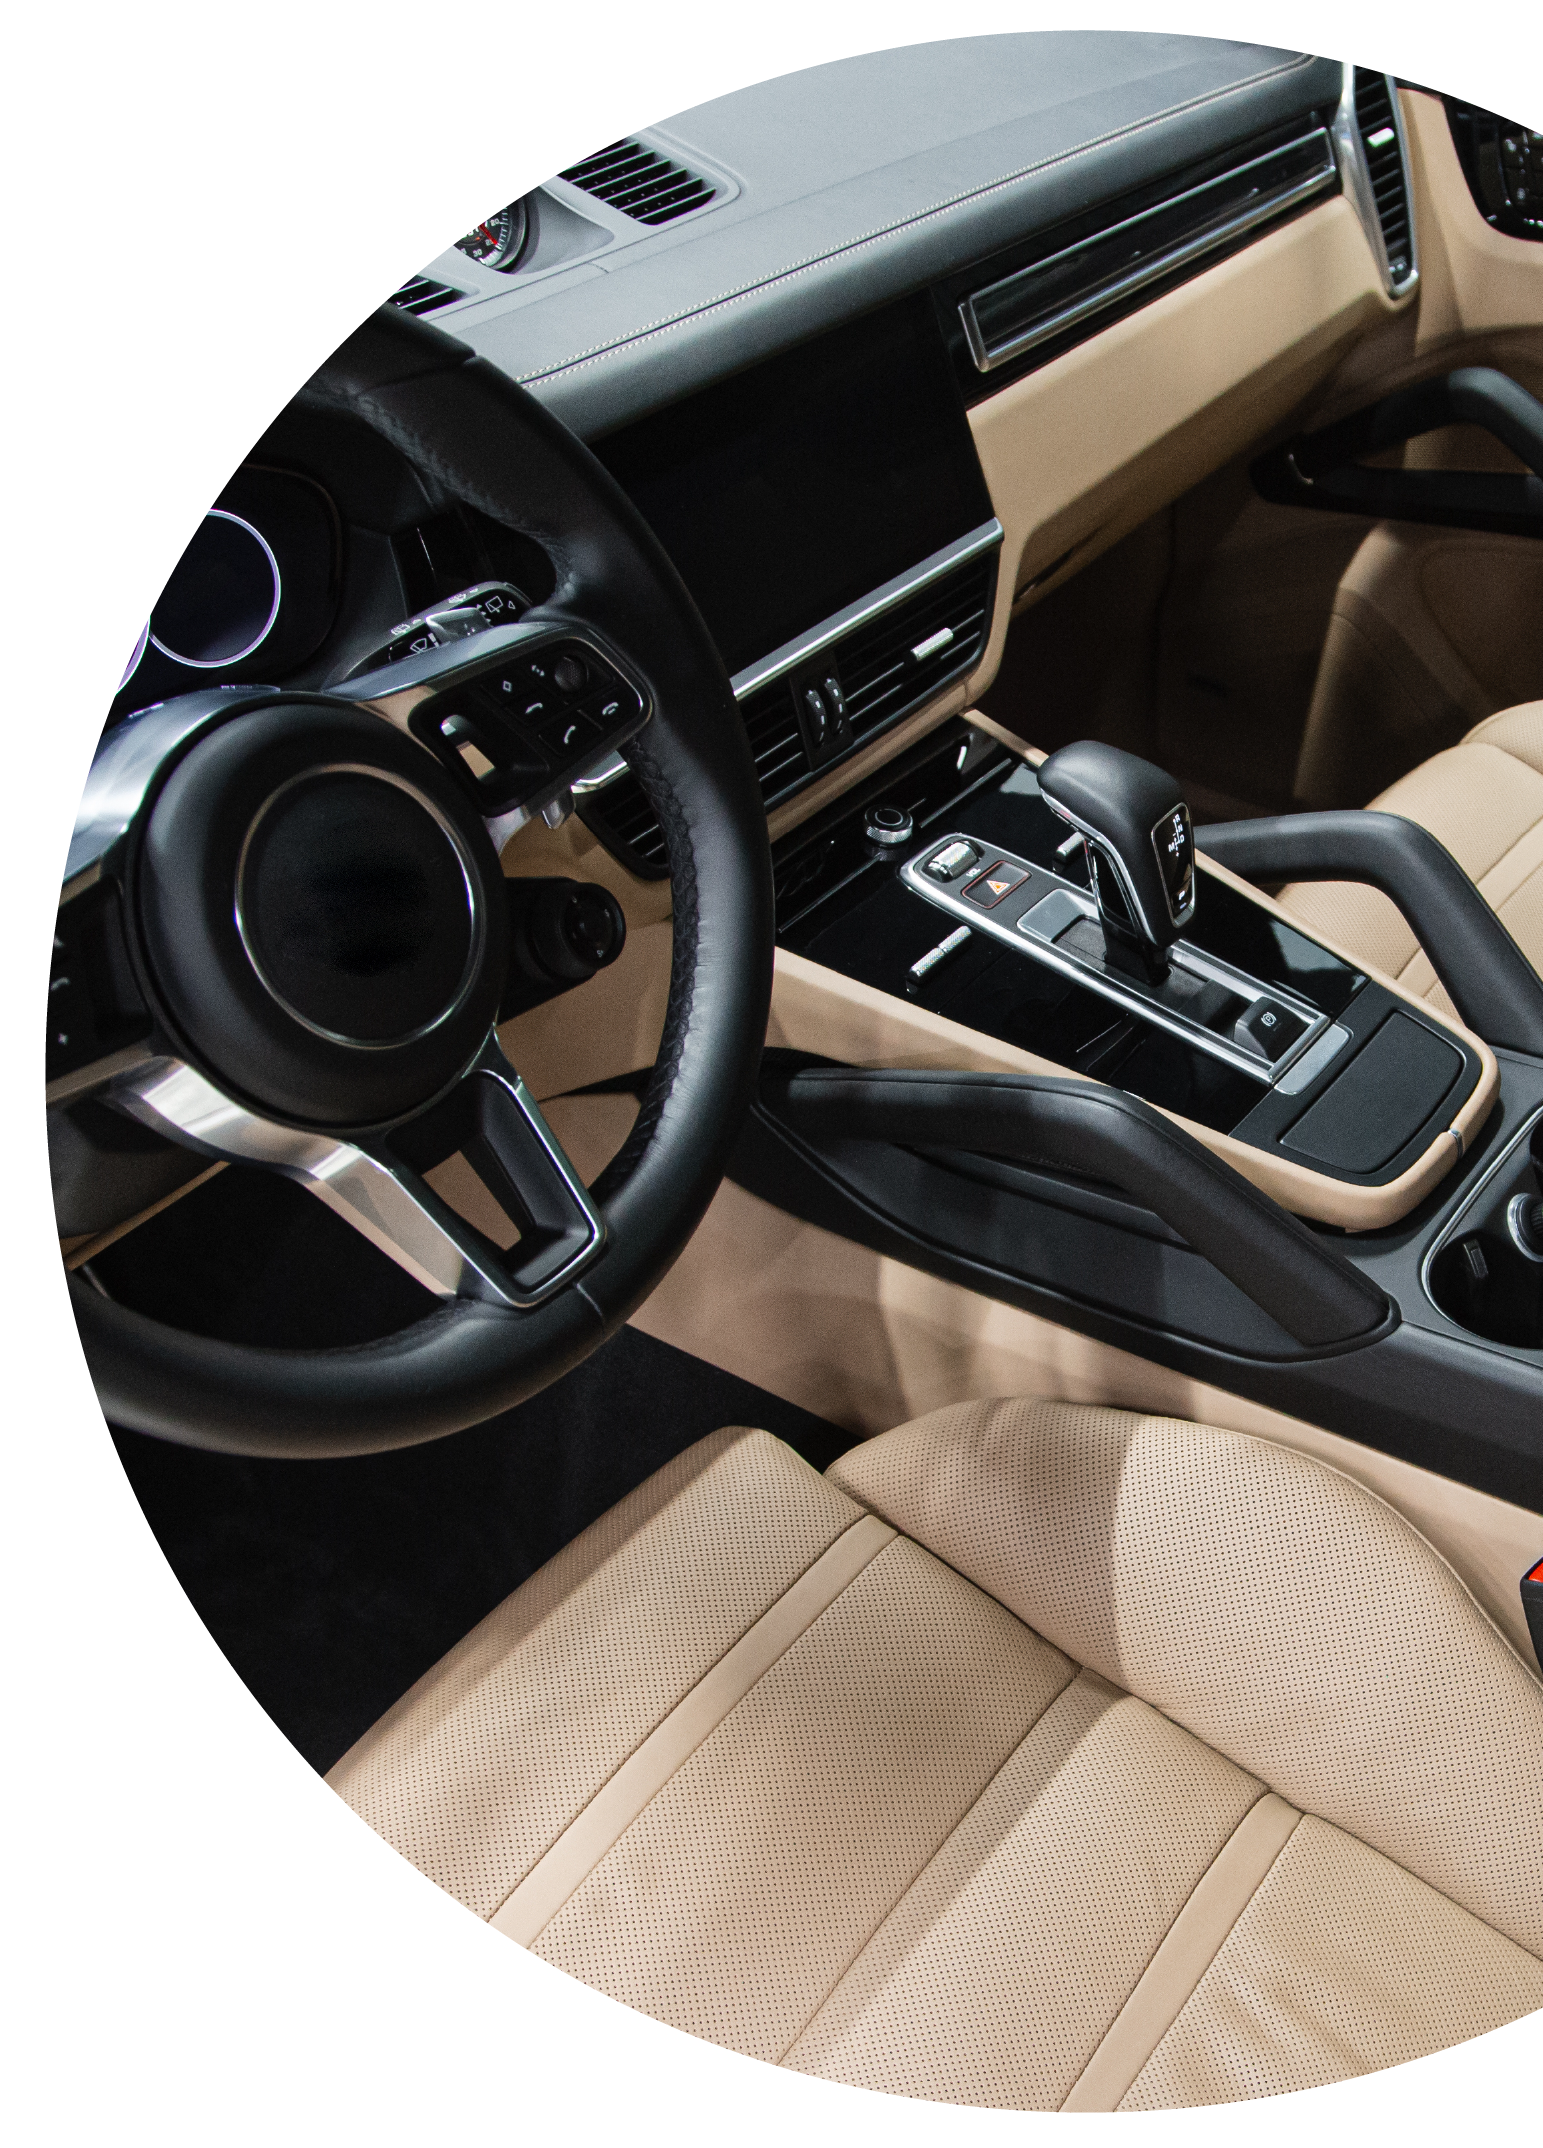 Car detailing series. interior of a luxury car.